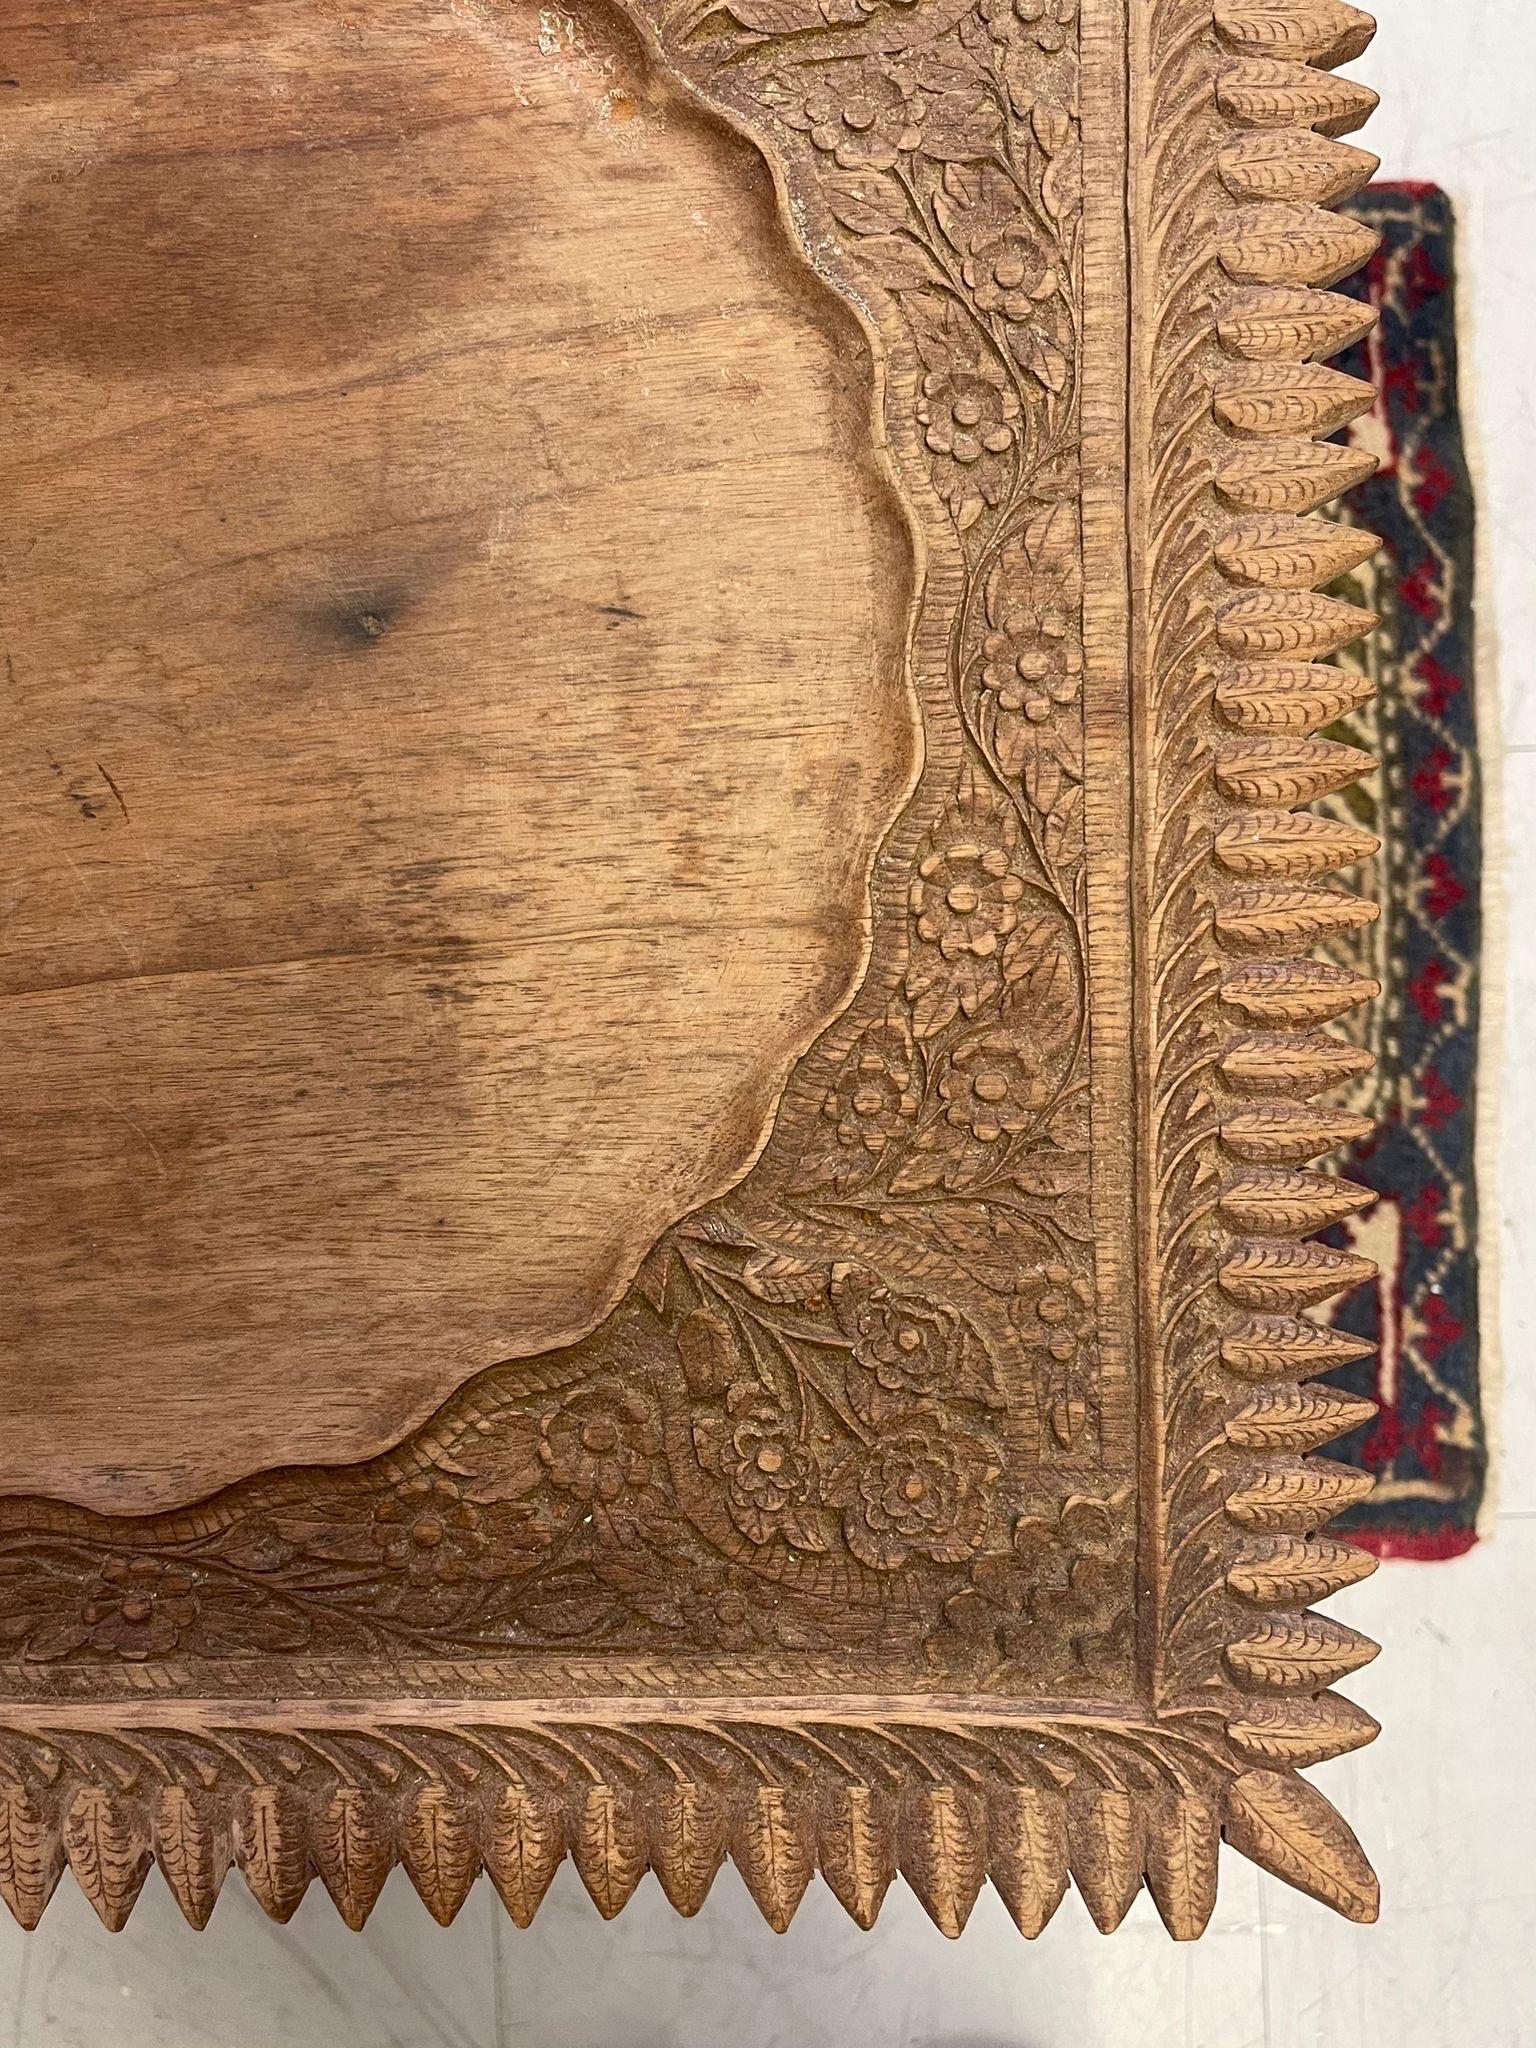 Vintage Carved Wood Side Table With Floral Motif. For Sale 1